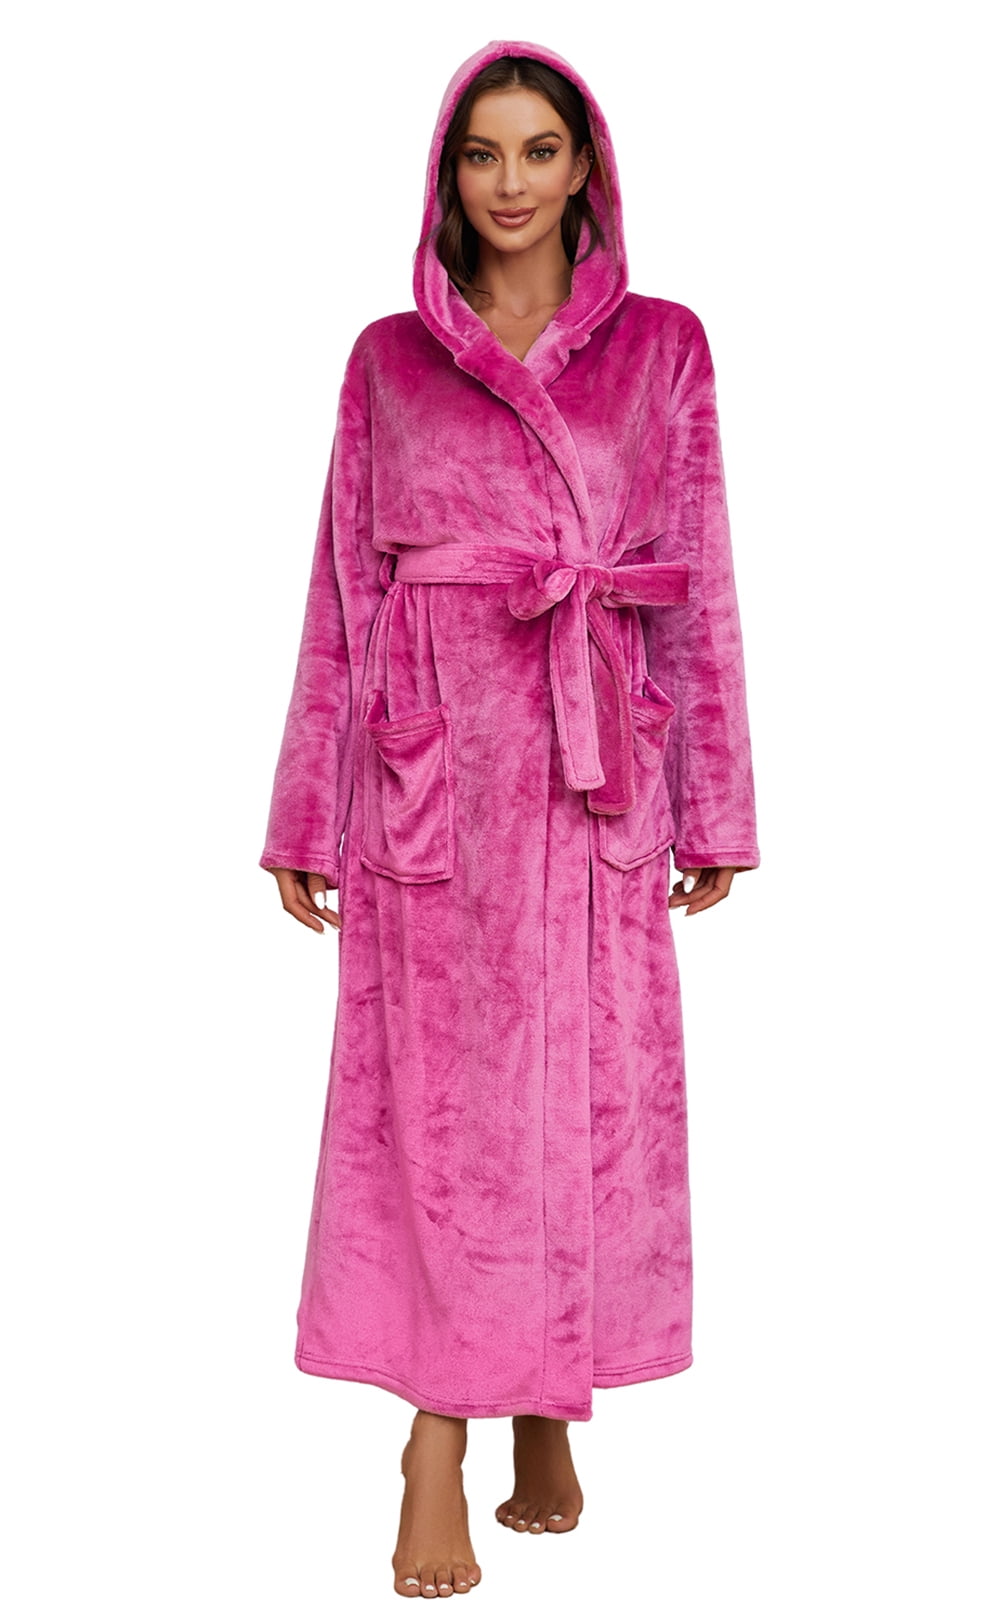 HEARTNICE Womens Hooded Long Robes, Soft Warm Fleece Full Length Plush ...